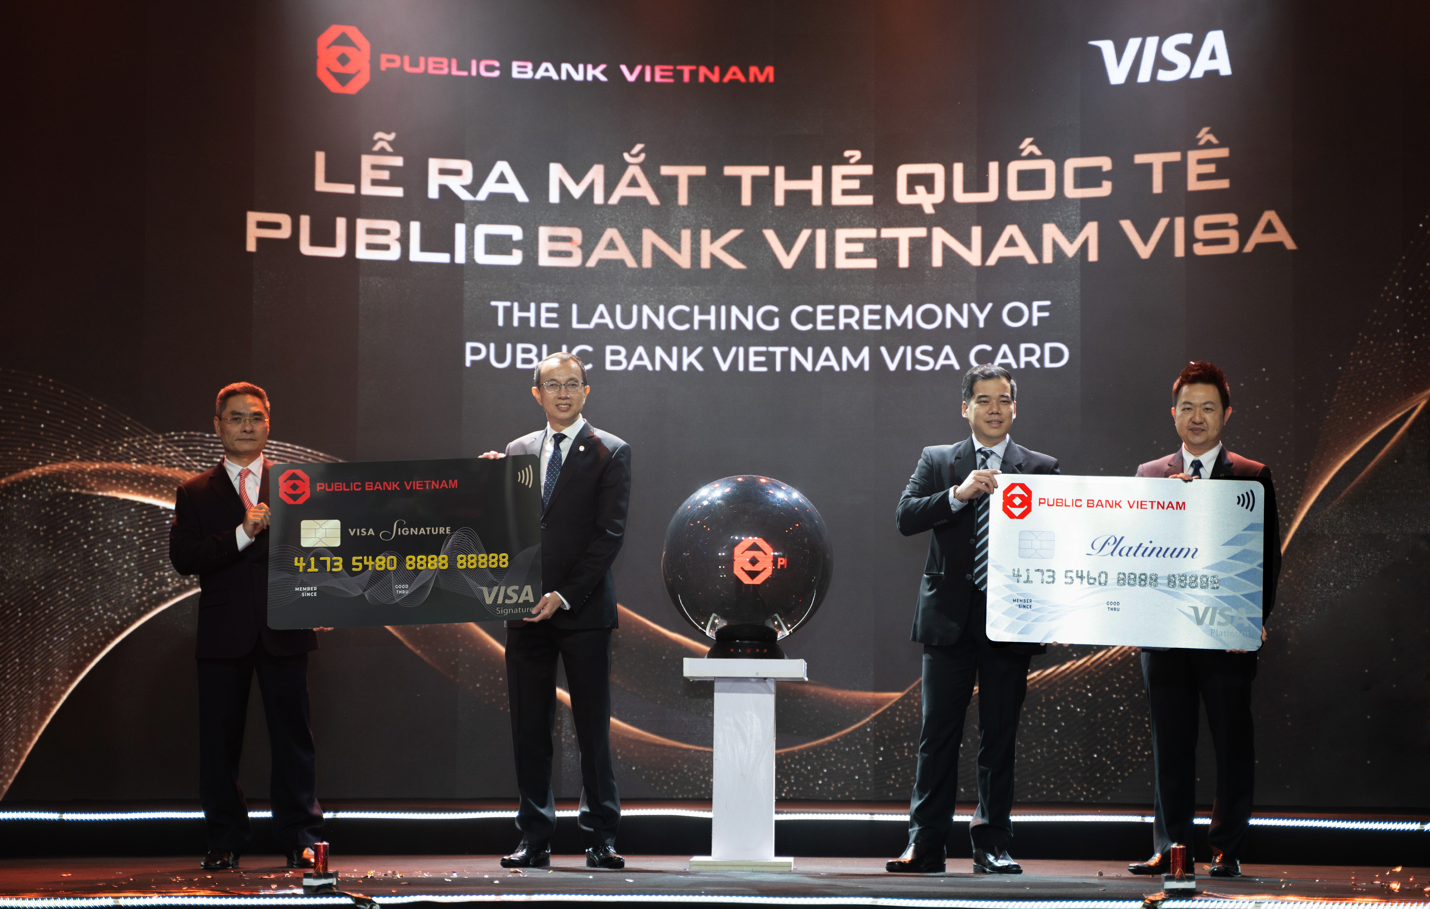 ra mat the quoc te thuong hieu public bank vietnam visa